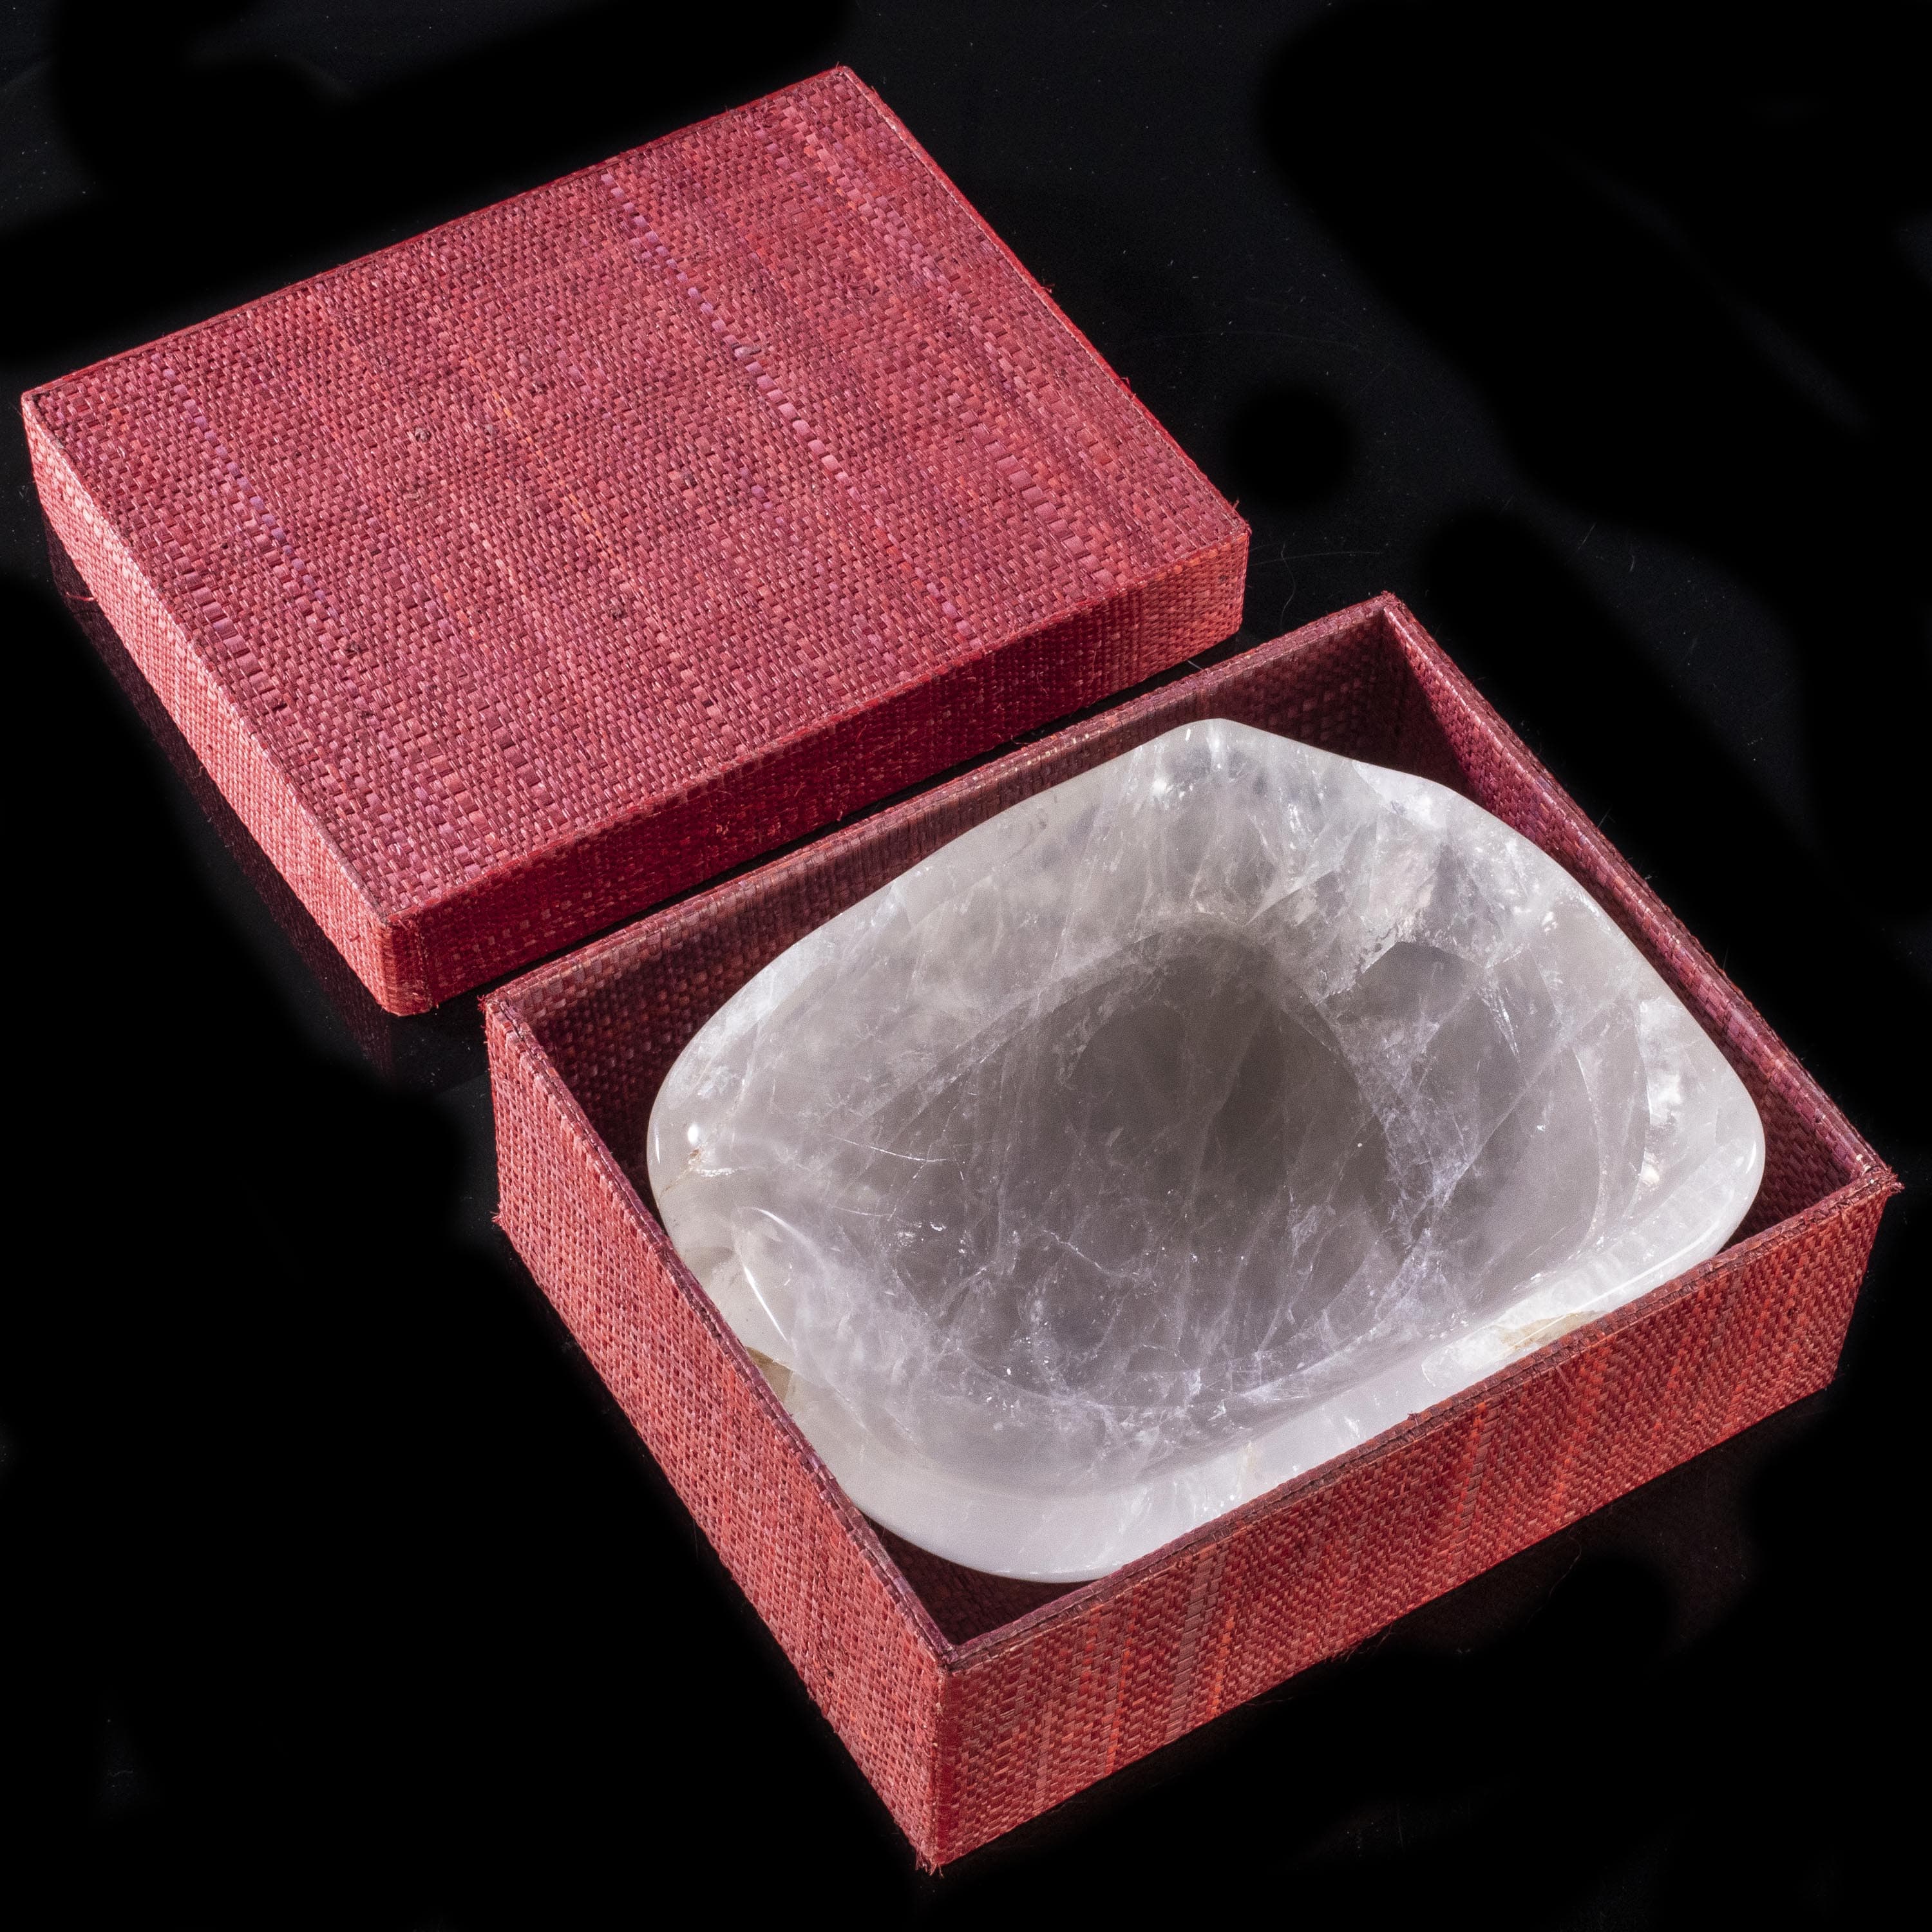 Kalifano Quartz Natural Crystal Quartz Bowl - 2,340 grams BQ1974.001